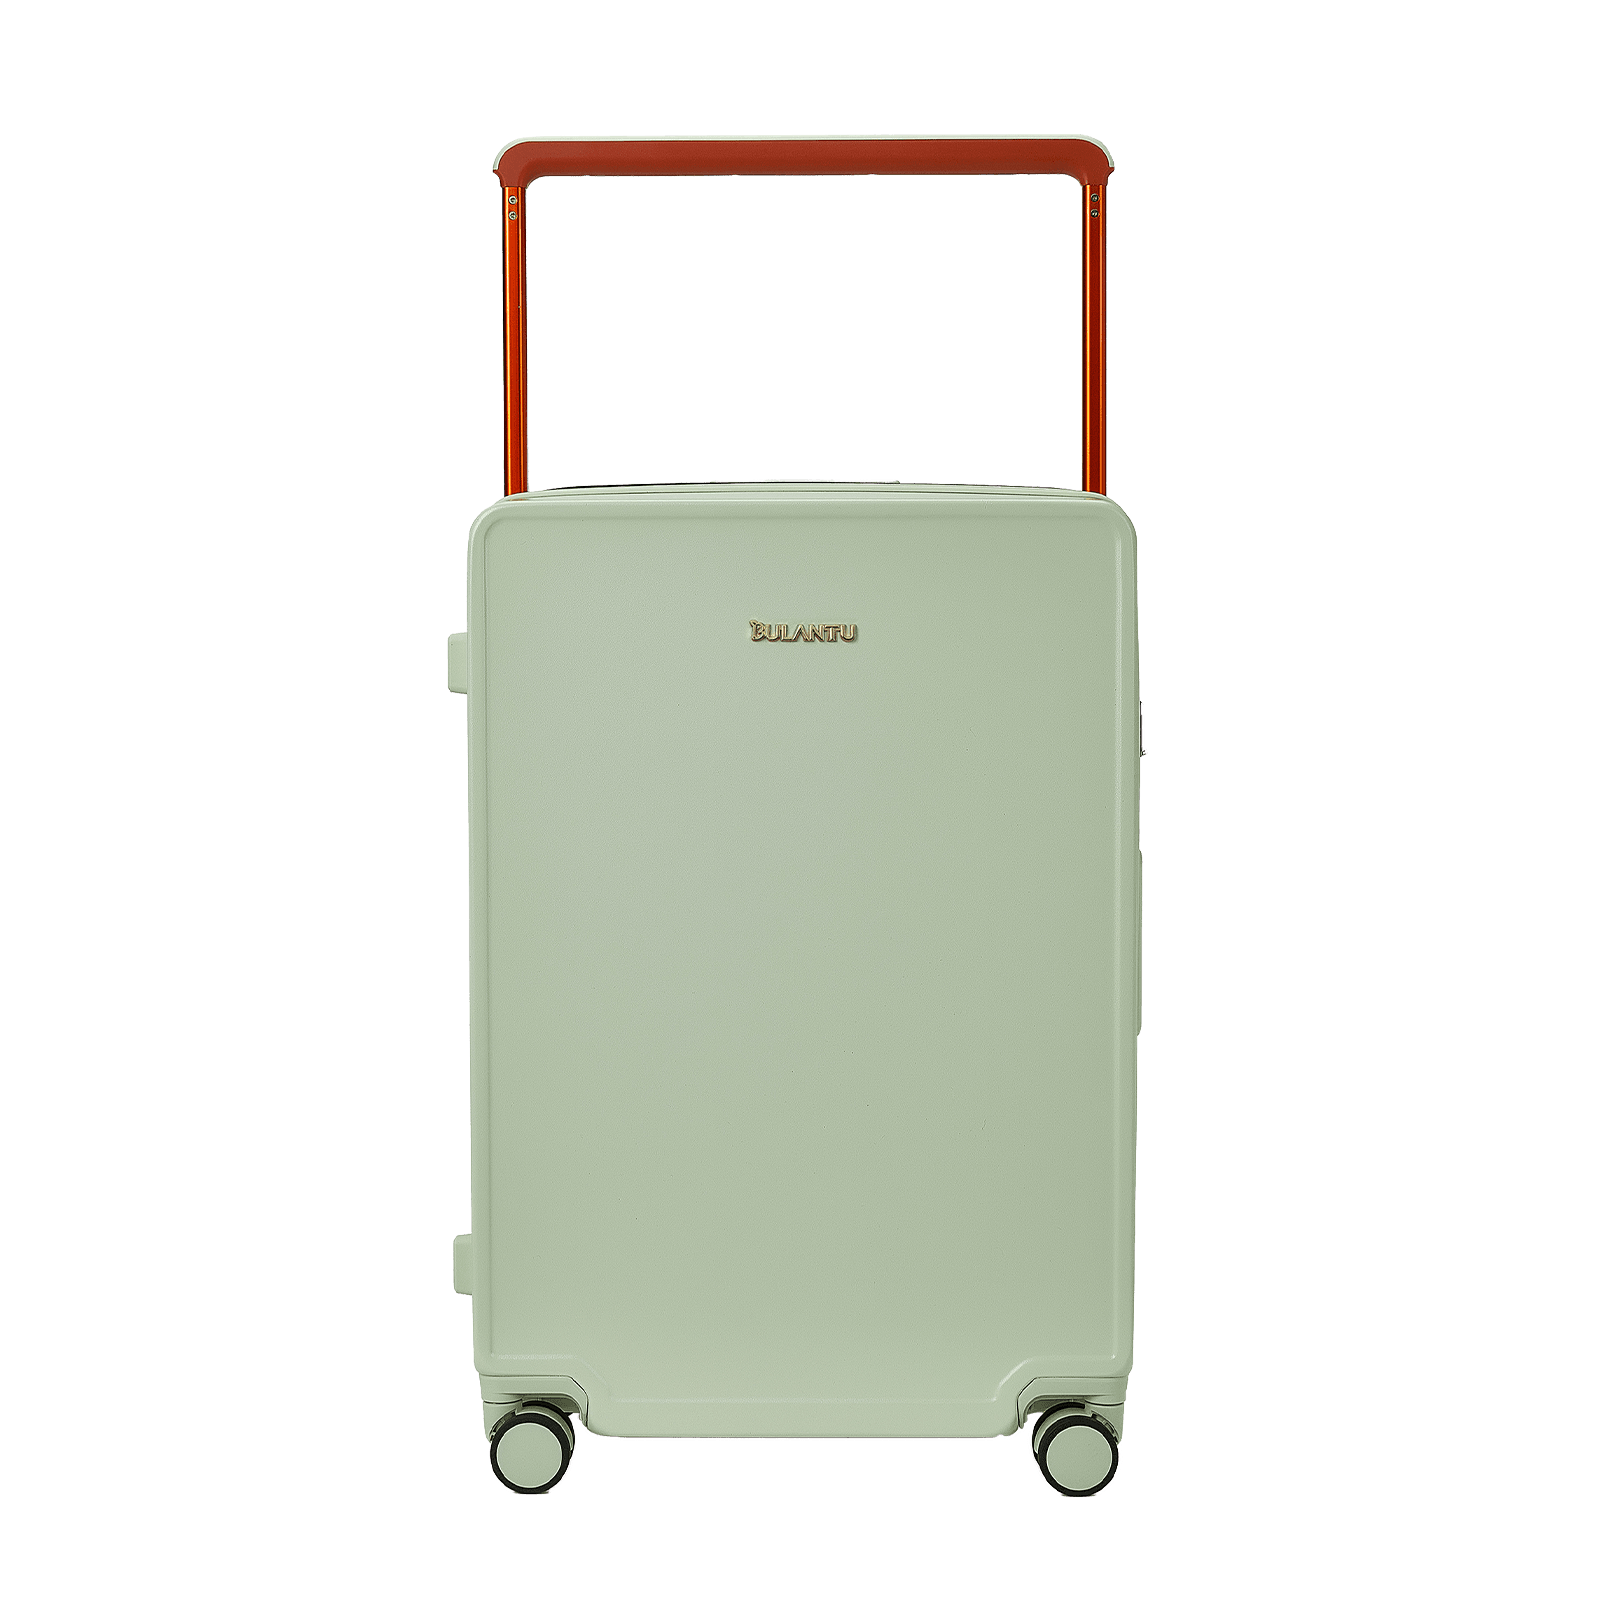 Diverse design luggage